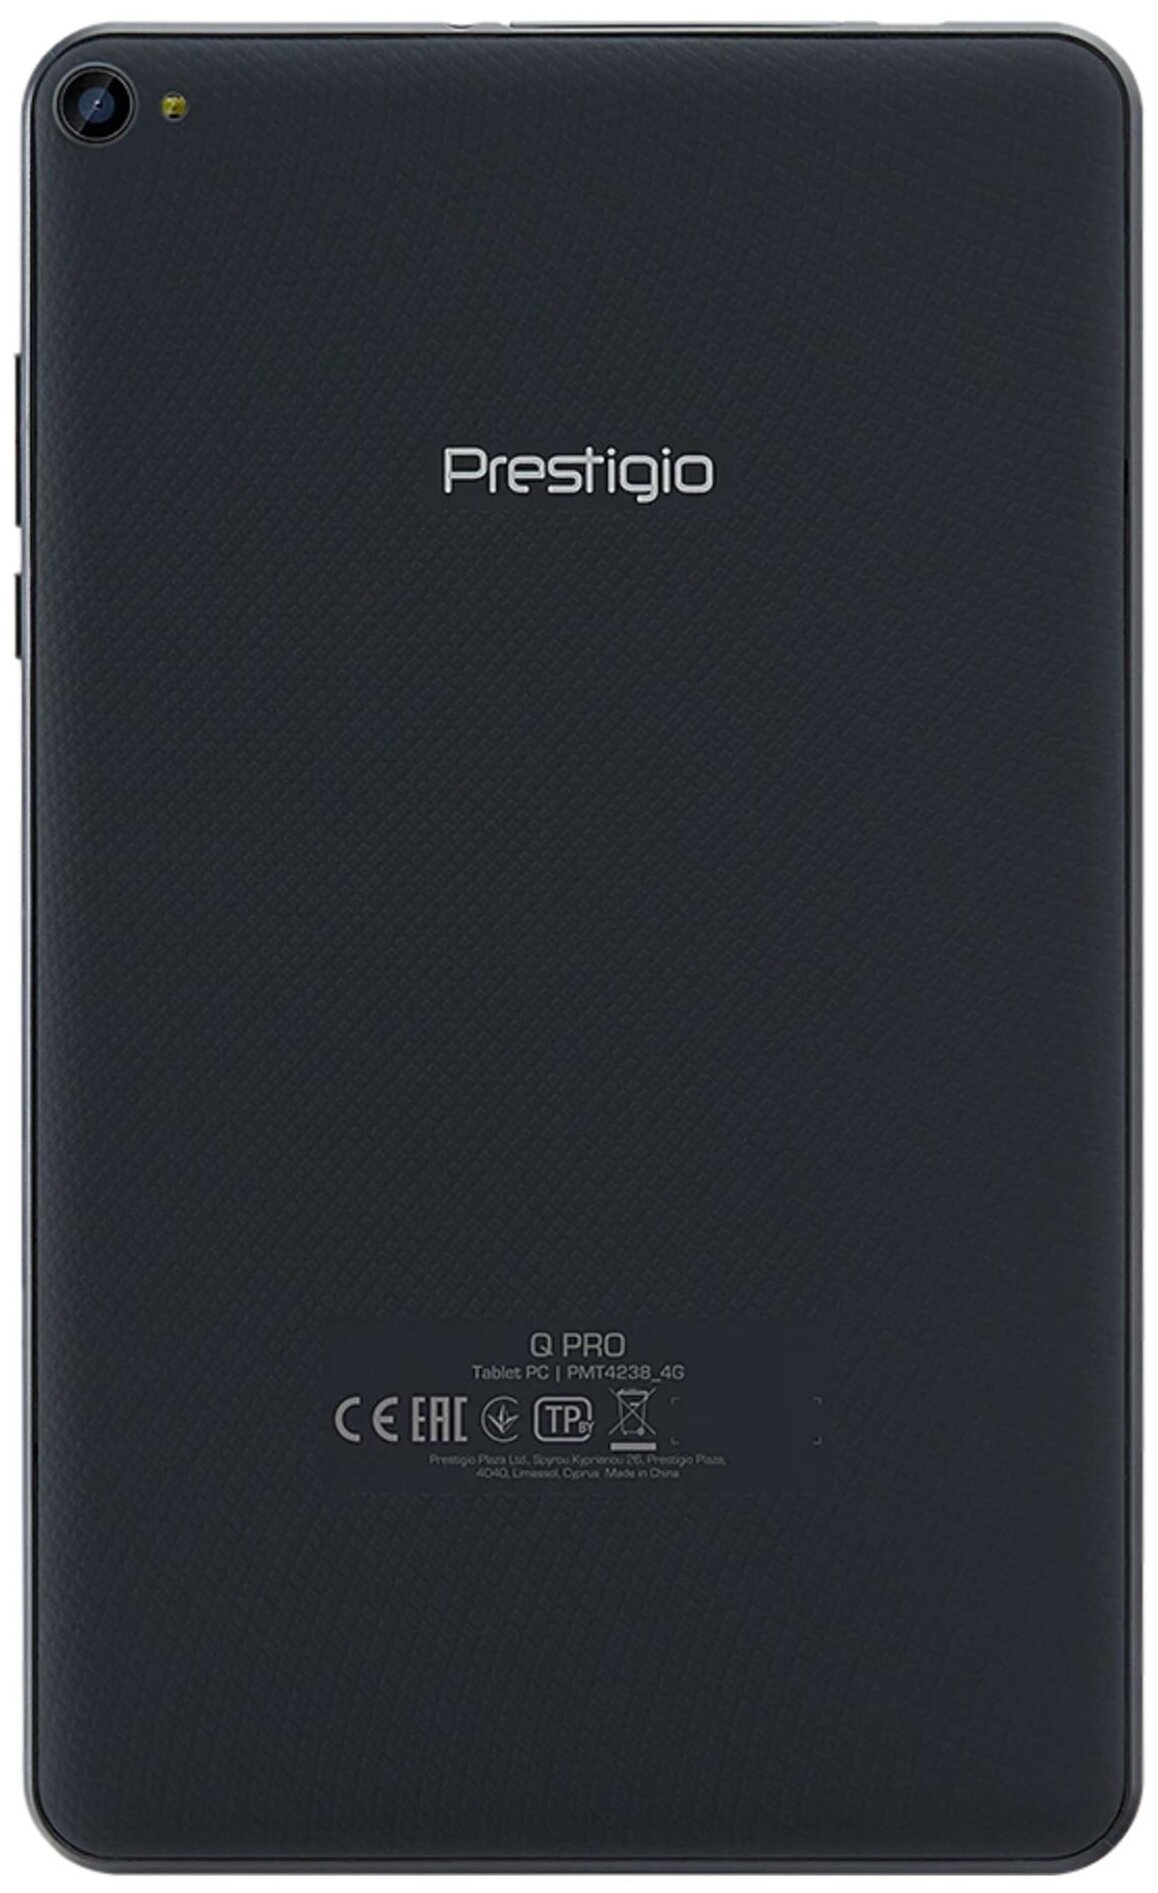 Q Pro 8.0 LTE 16GB Dark Gray